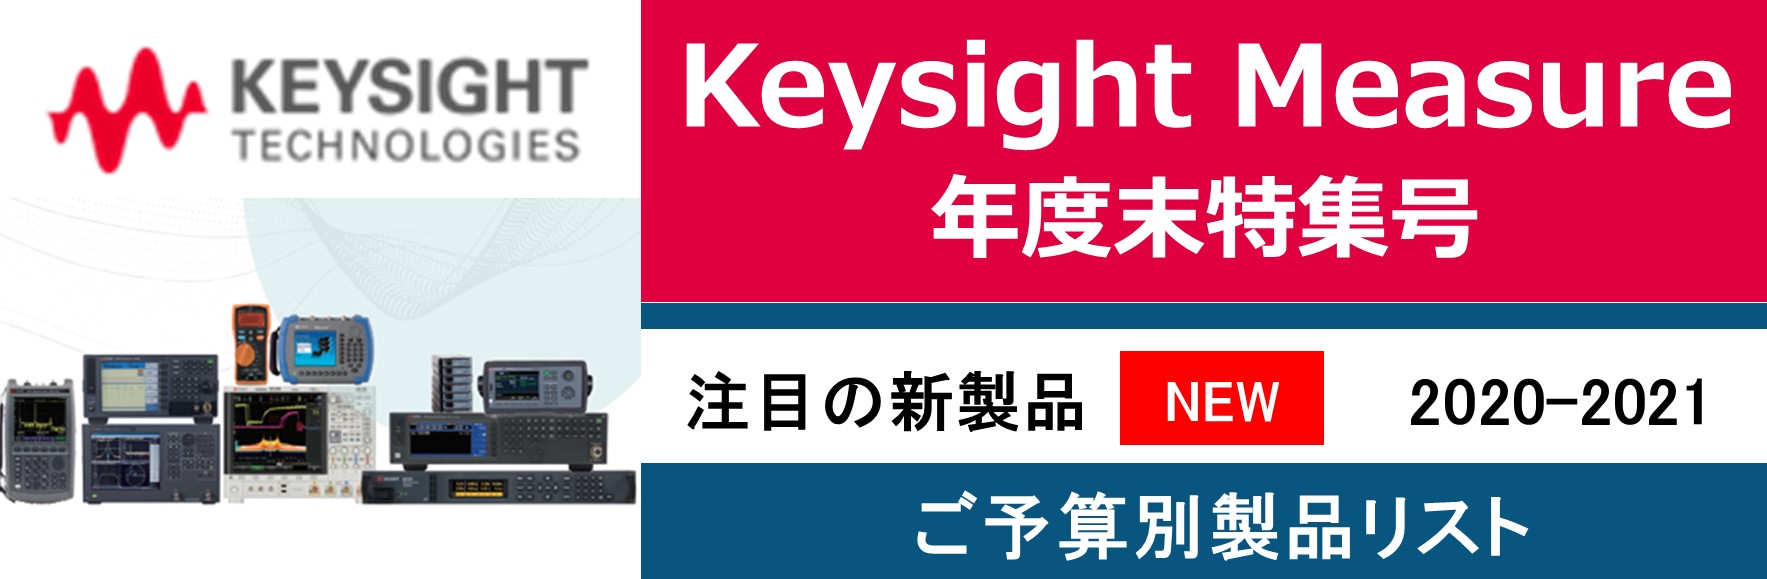 【新製品】Keysight Measure